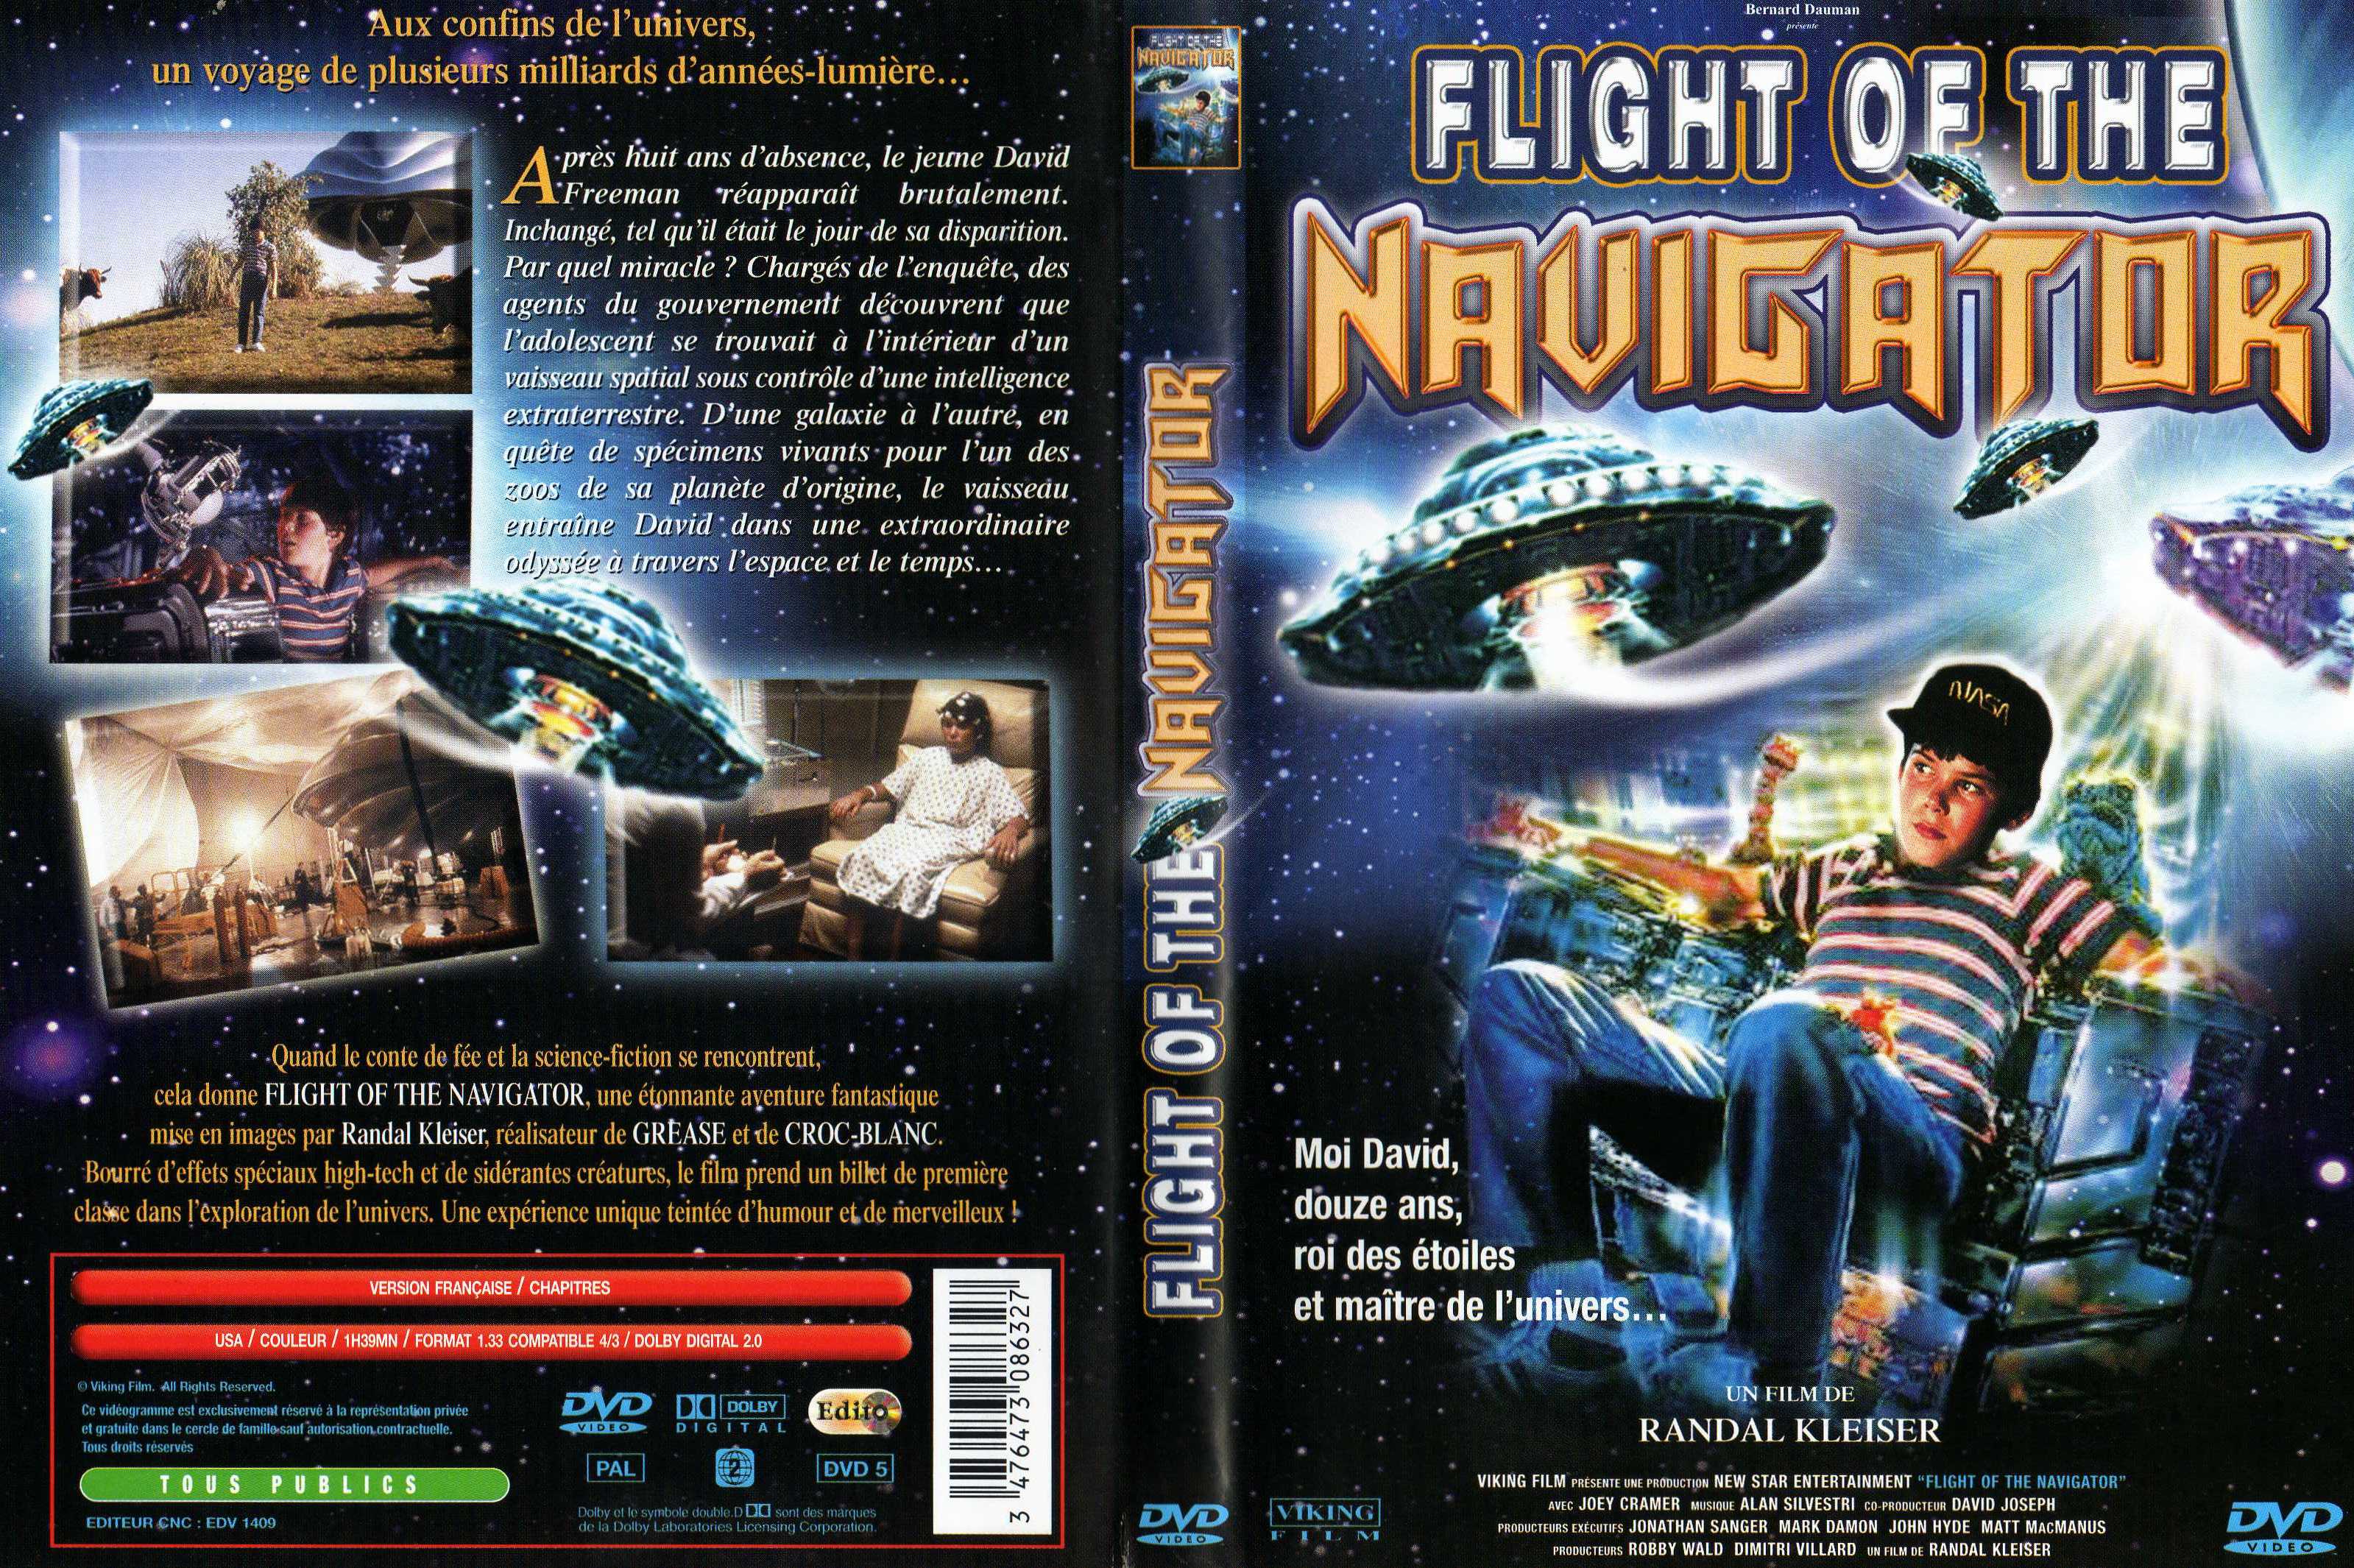 Jaquette DVD Flight of the navigator